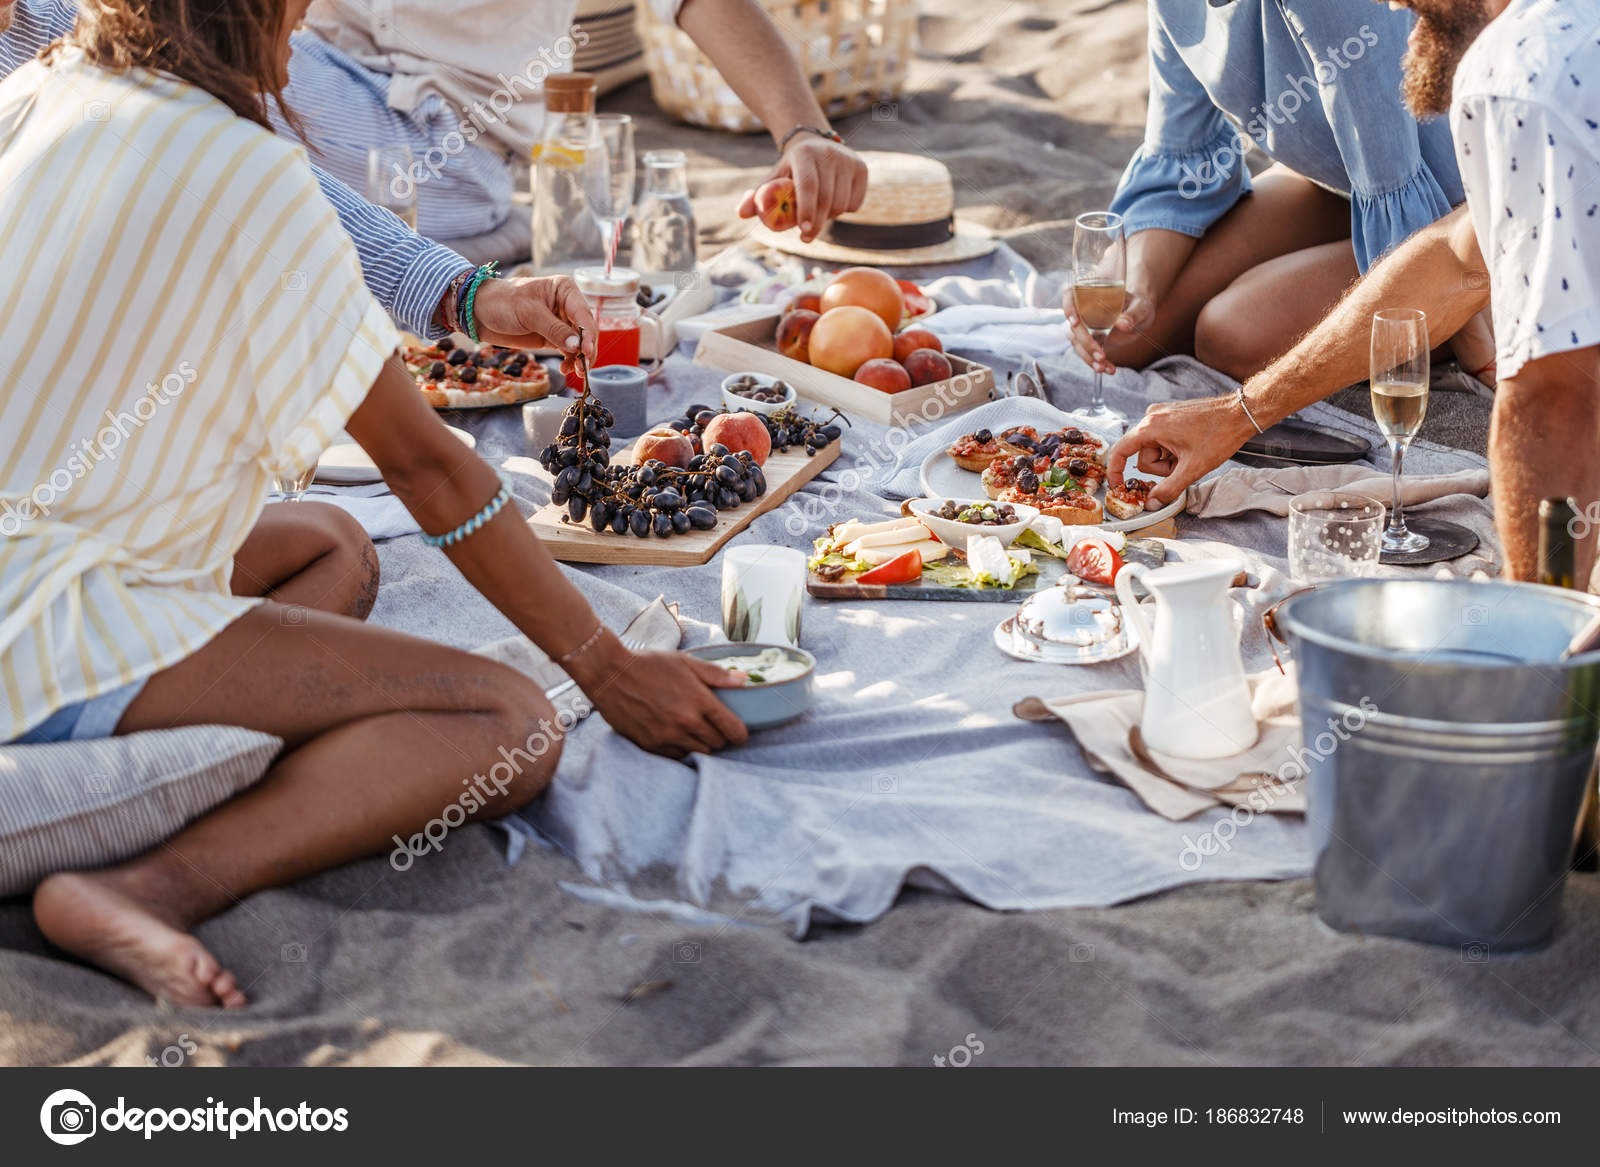 People Enjoying Food on Beach Picnic — Stock Photo © luminastock #186832748